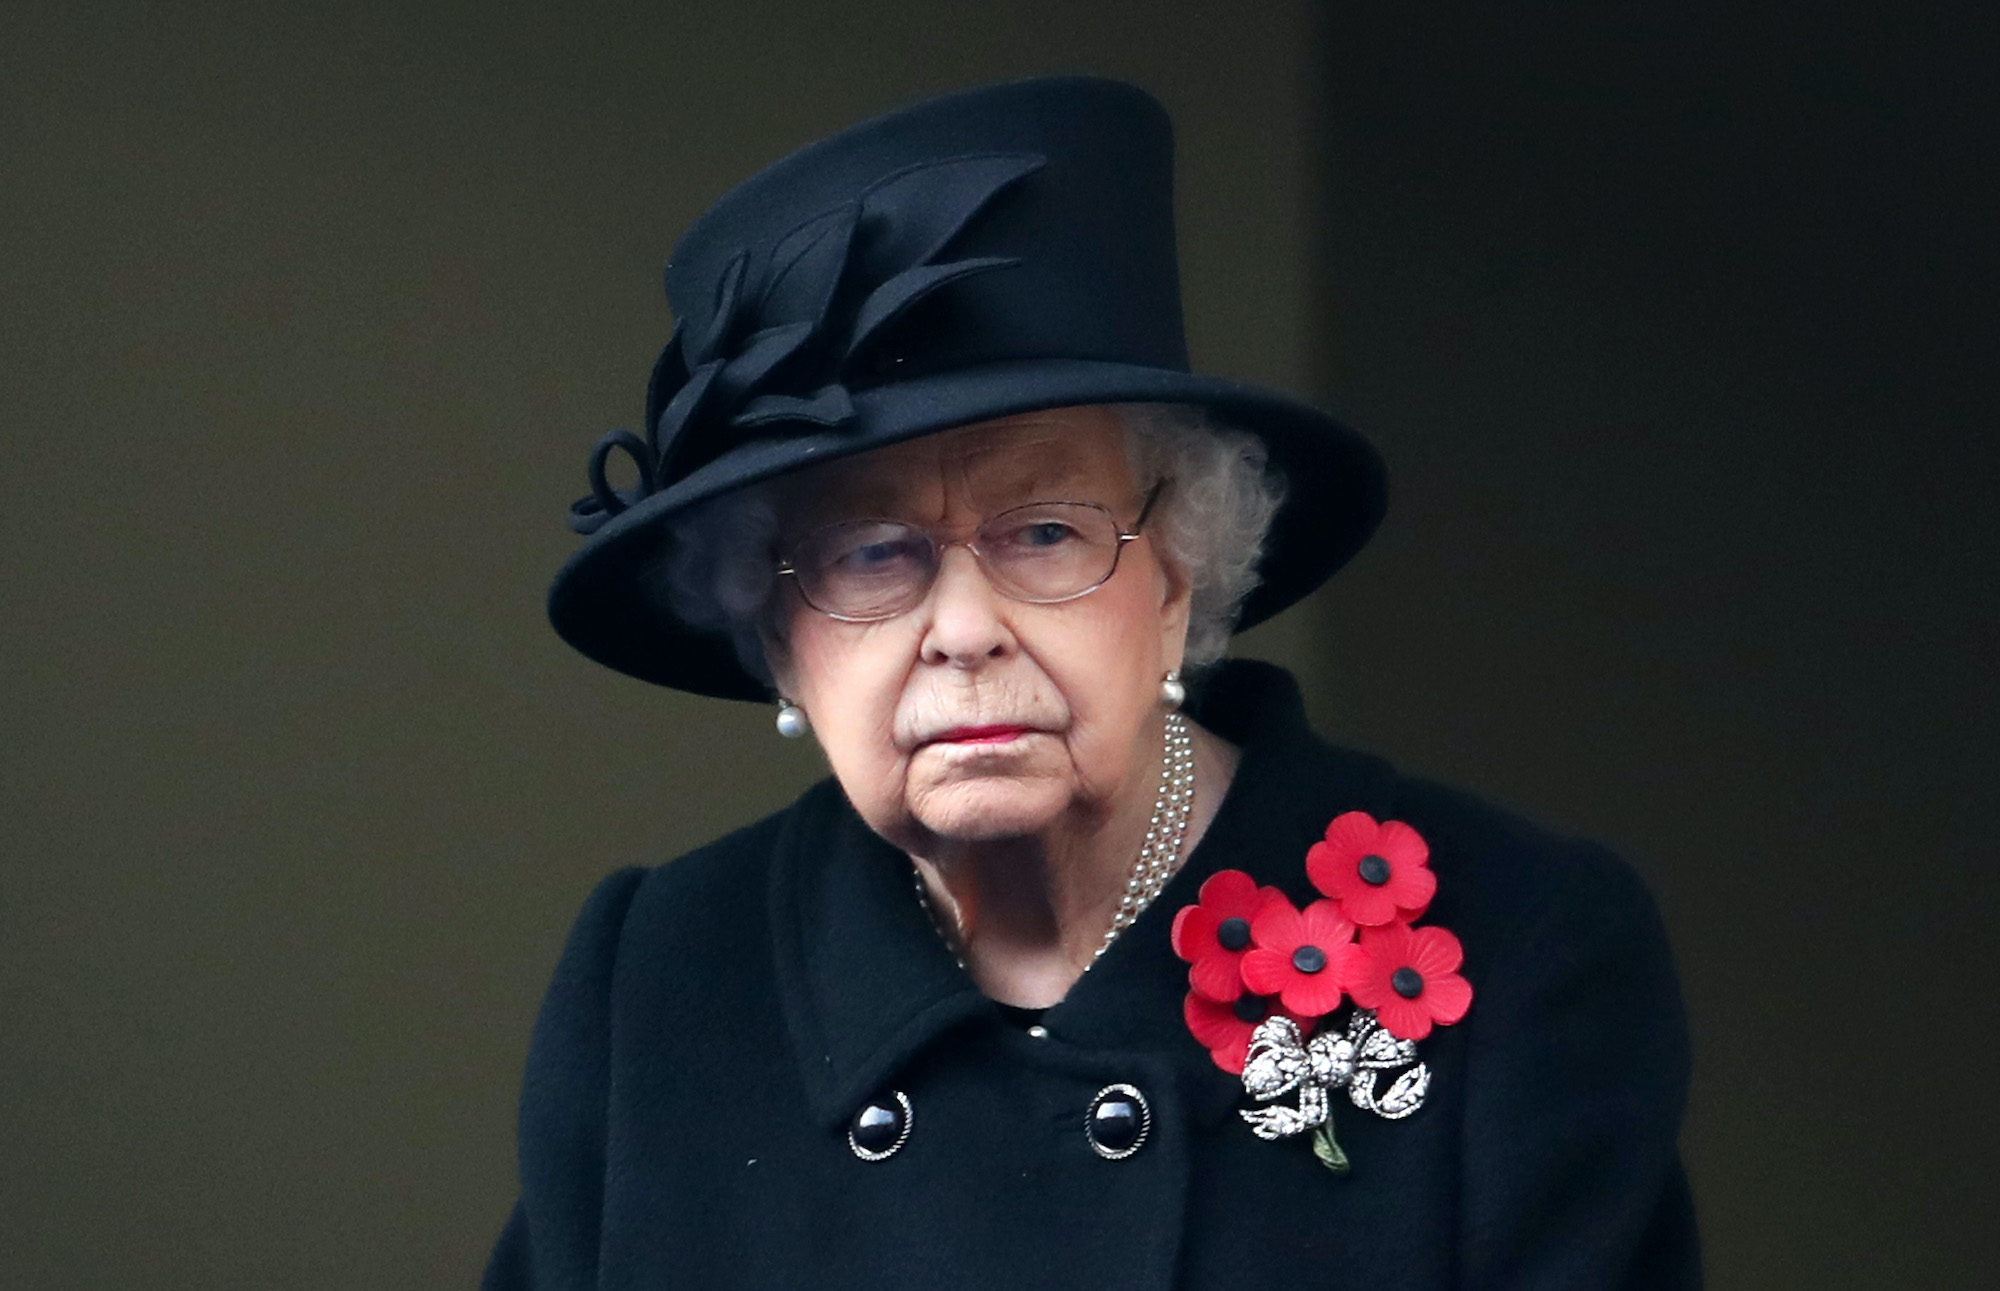 Queen Elizabeth II dressed in black